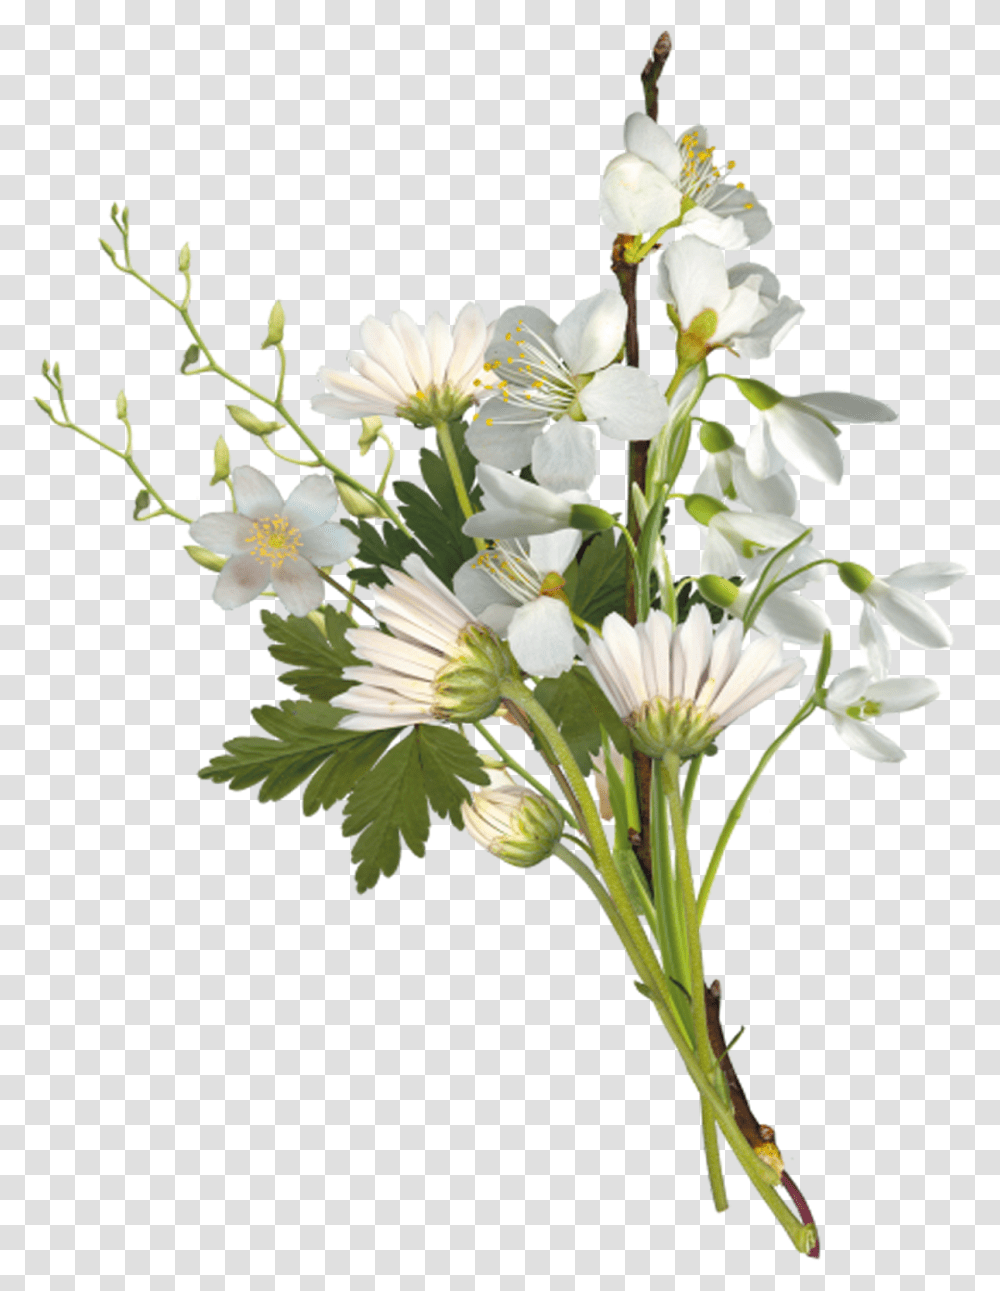 Black And White Flower Bouquet Clipart Graphic Free Small Flower Bouquet, Plant, Flower Arrangement, Amaryllidaceae, Daisy Transparent Png